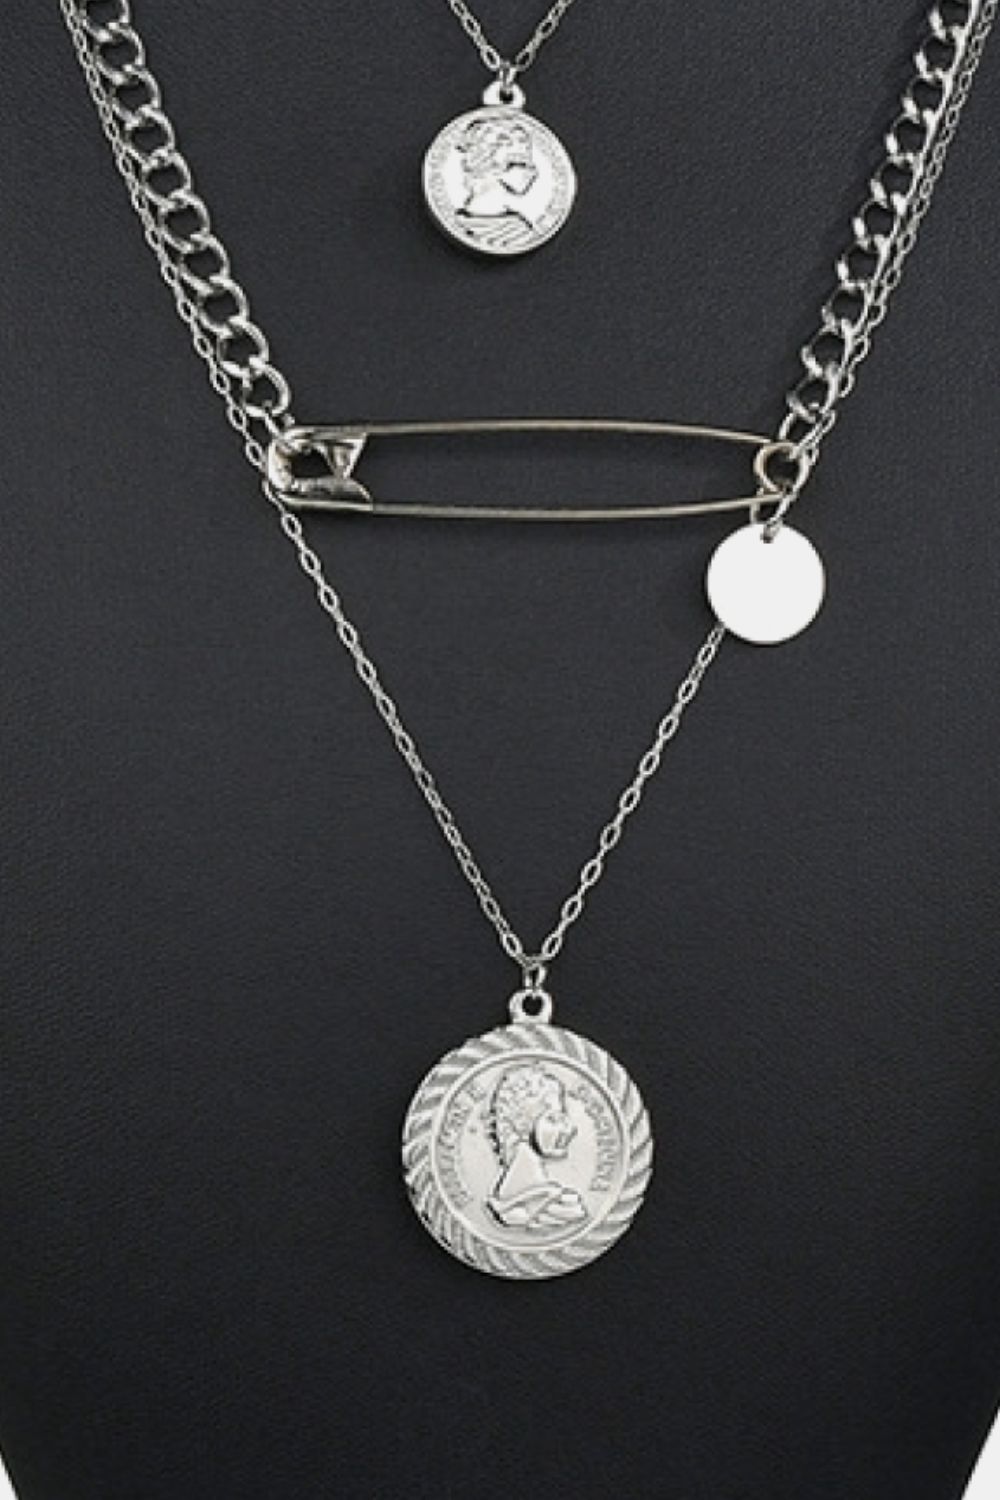 Minimalist Design Antique Coins Necklace - Guy Christopher